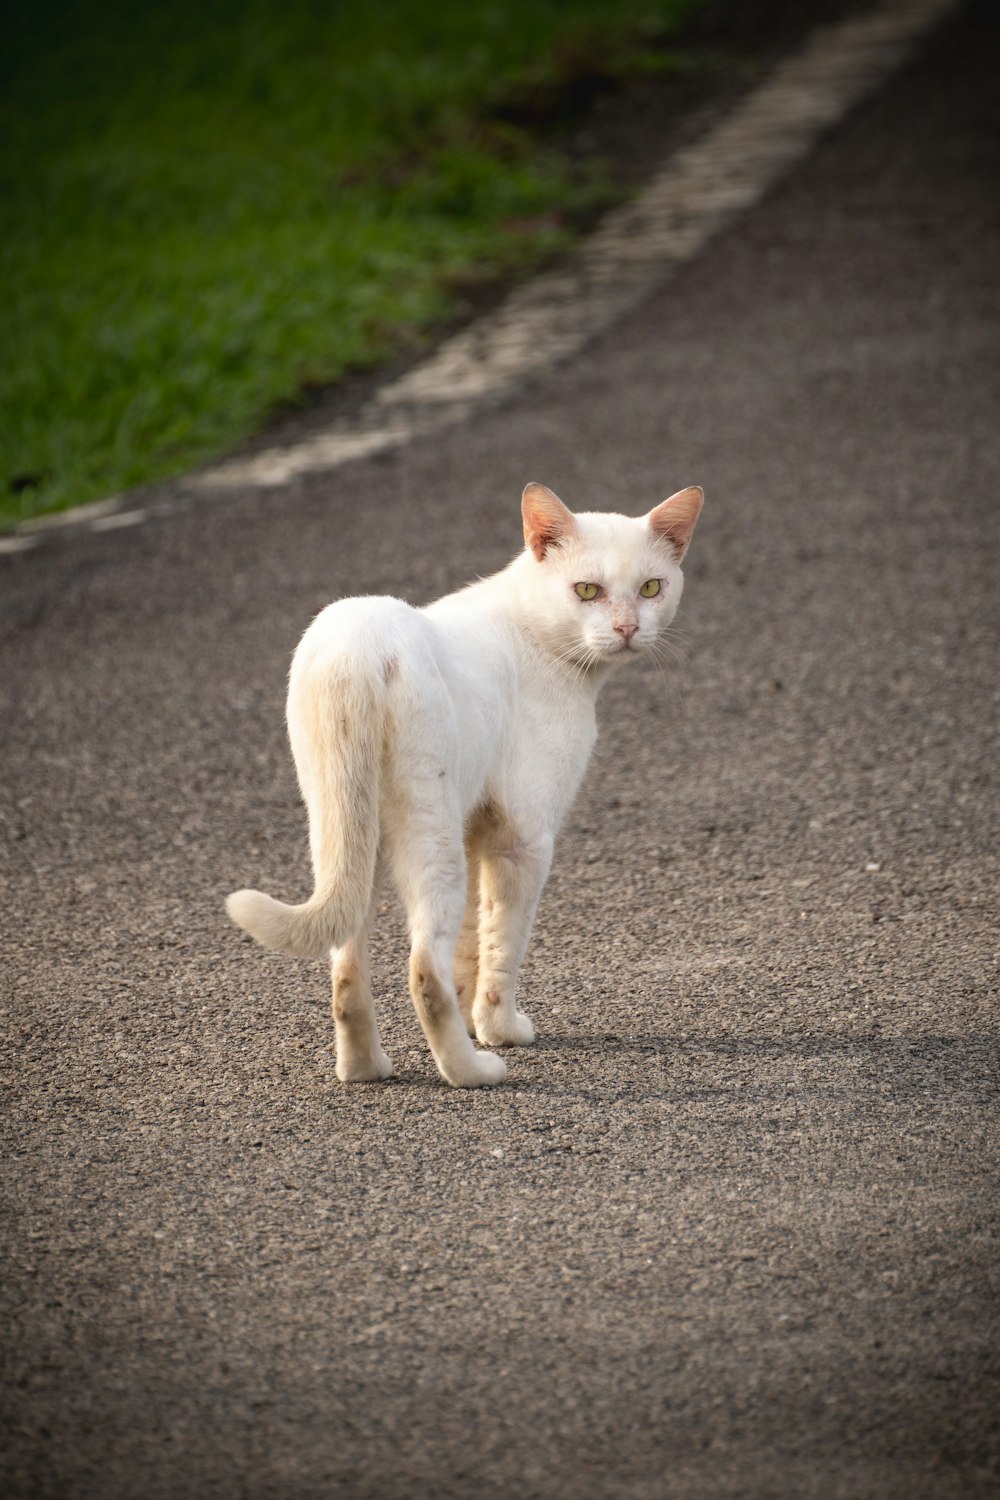 a cat walking on a road